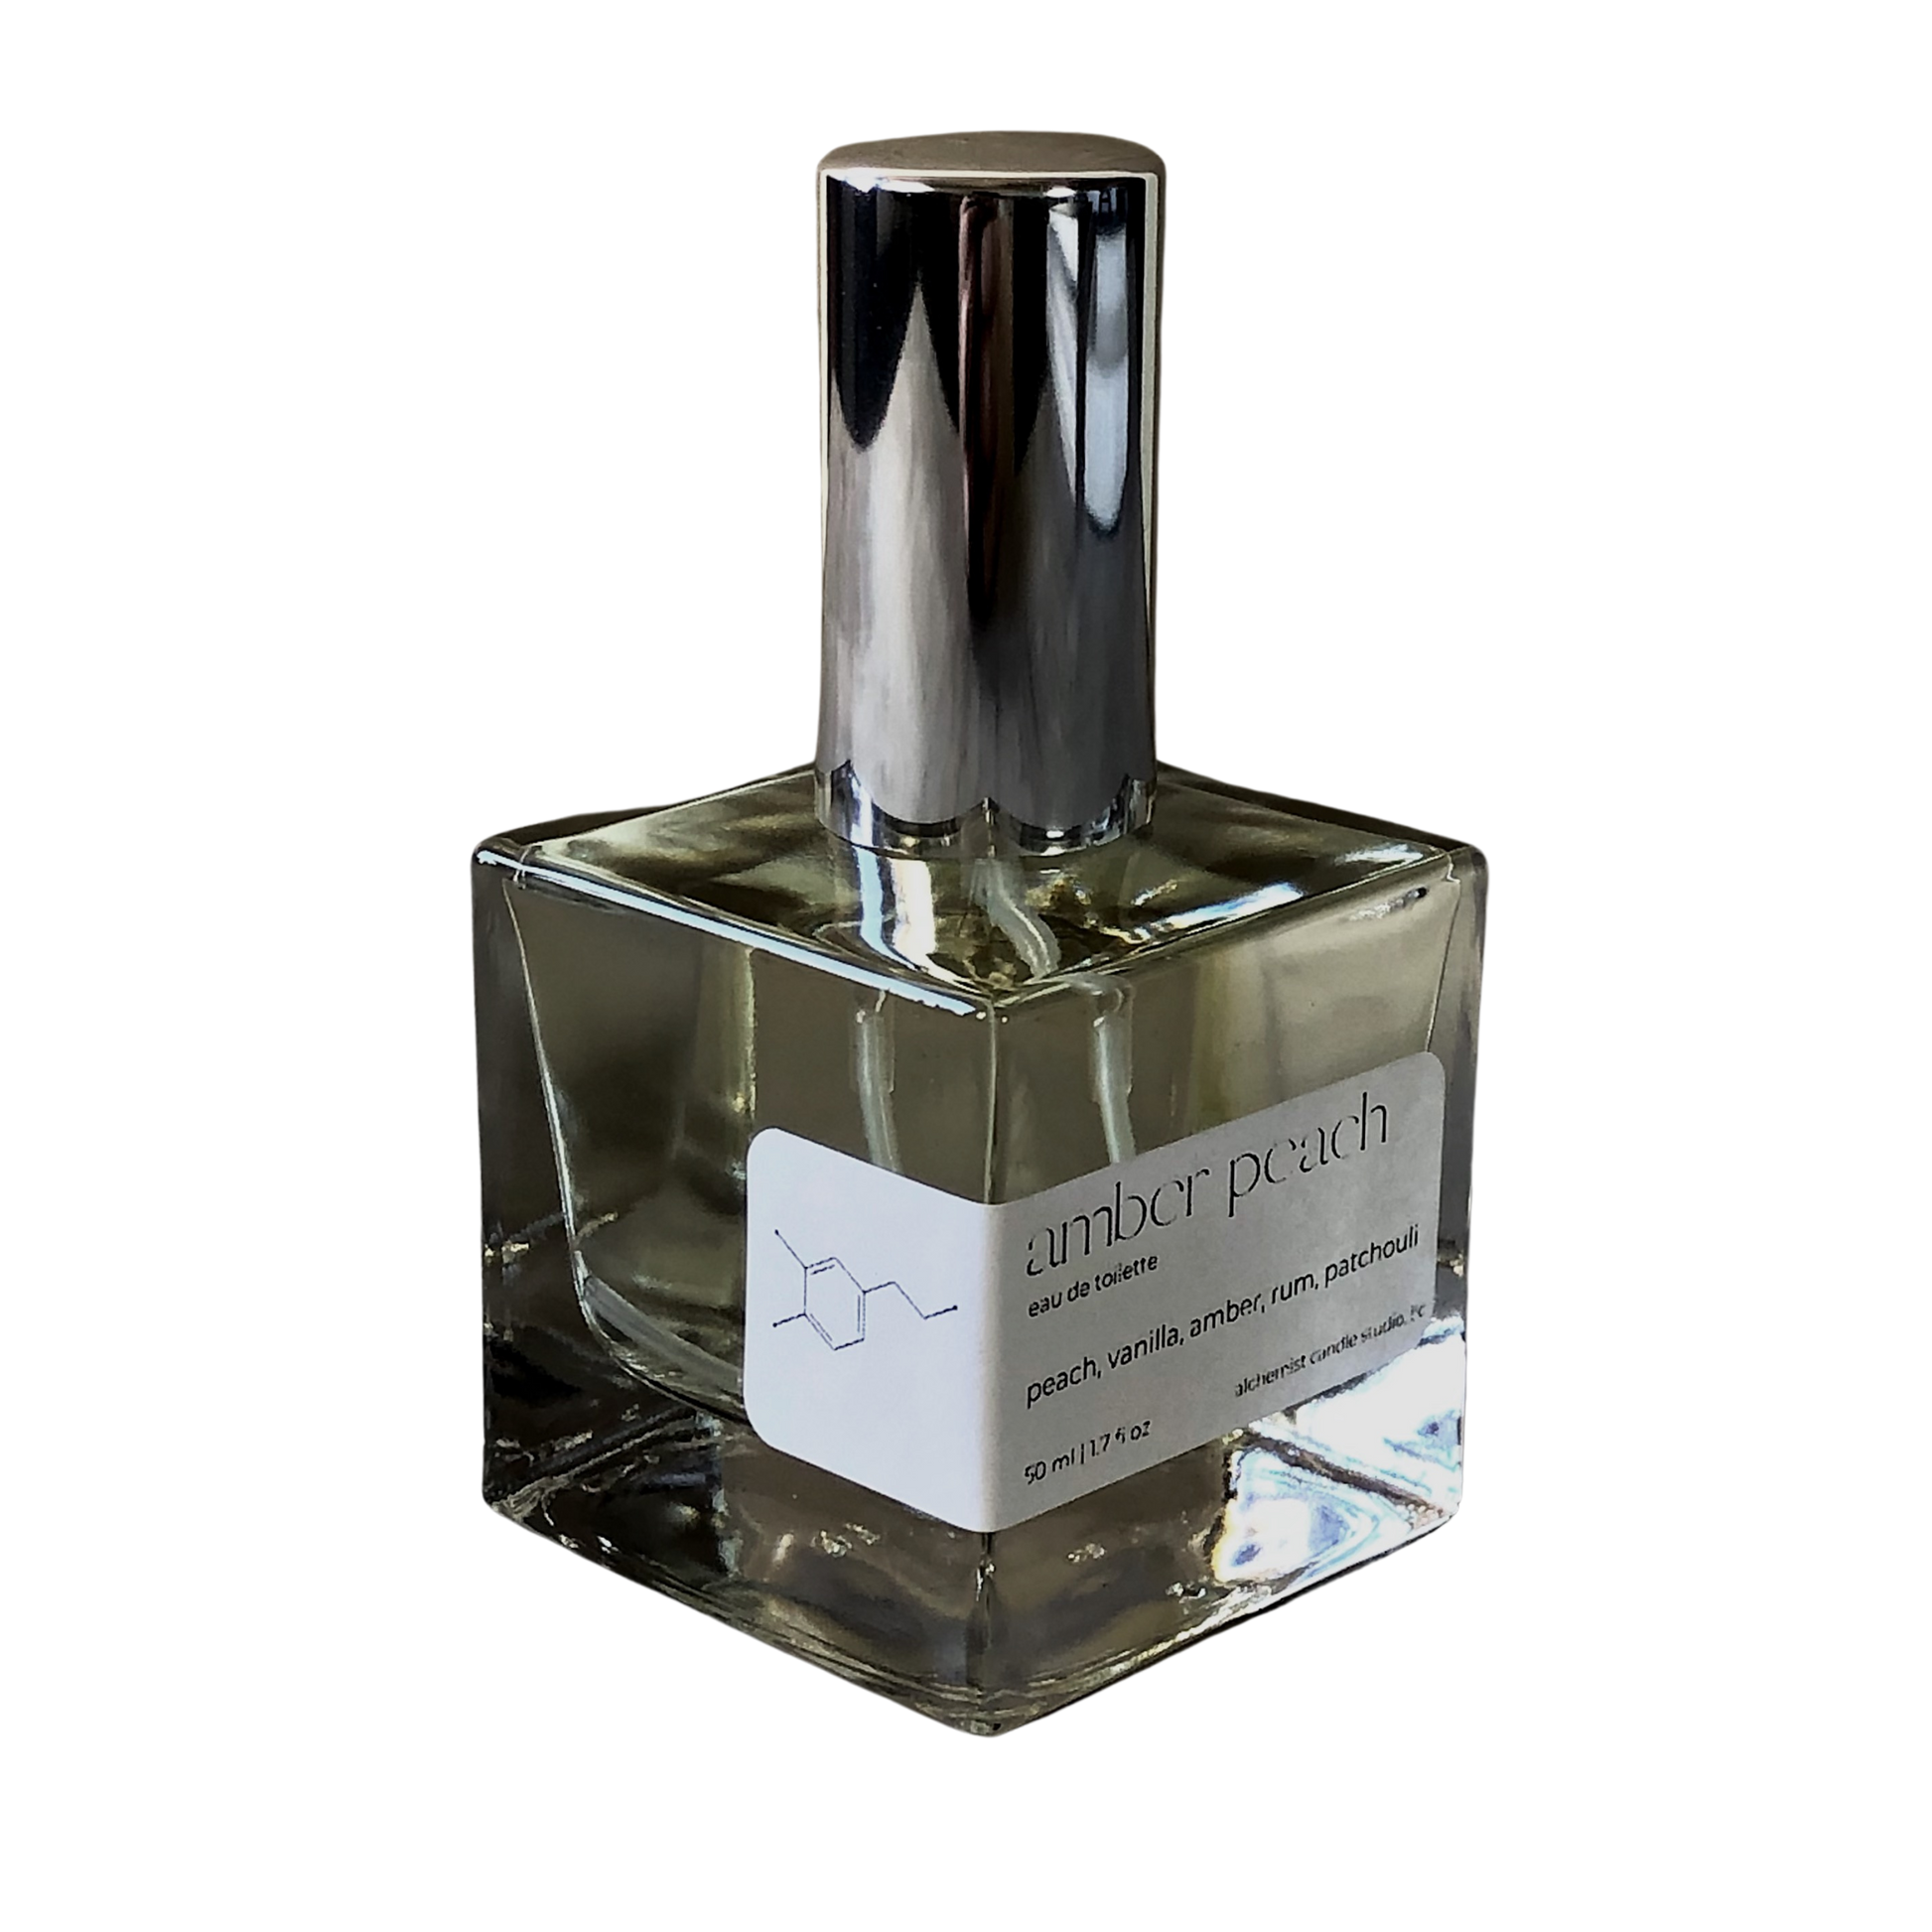 AMBER AROMA – Creating Perfume